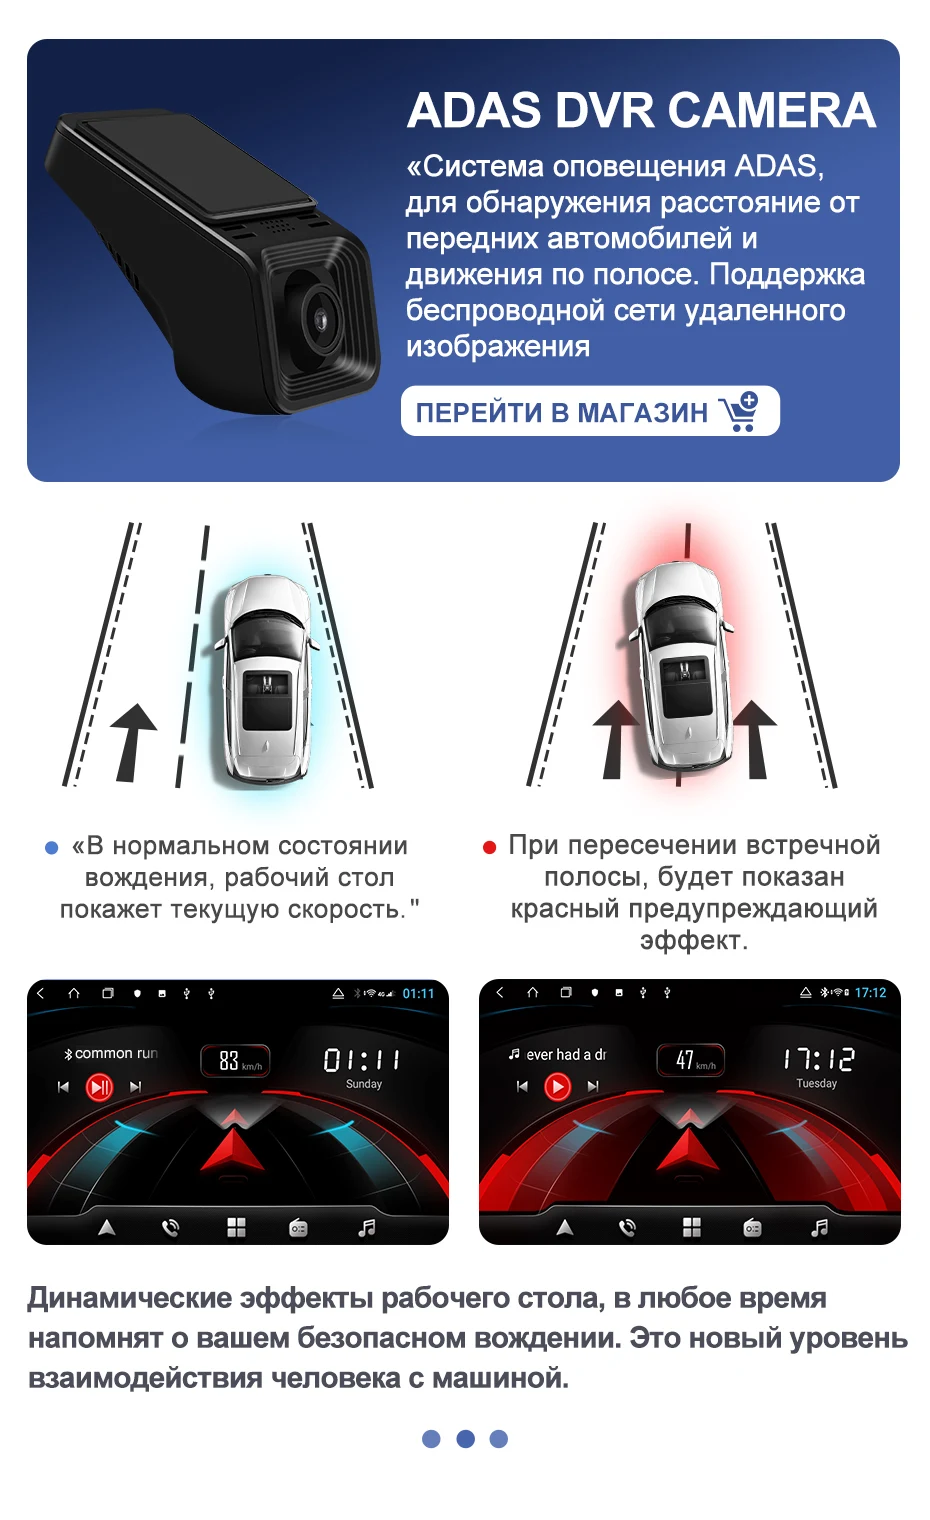 Isudar H53 4G Android 2 Din Авто Радио для Jeep/wrangler/Патриот/Компас/Путешествие автомобиля Мультимедиа gps 8 Core ram 4GB rom 64GB DVR